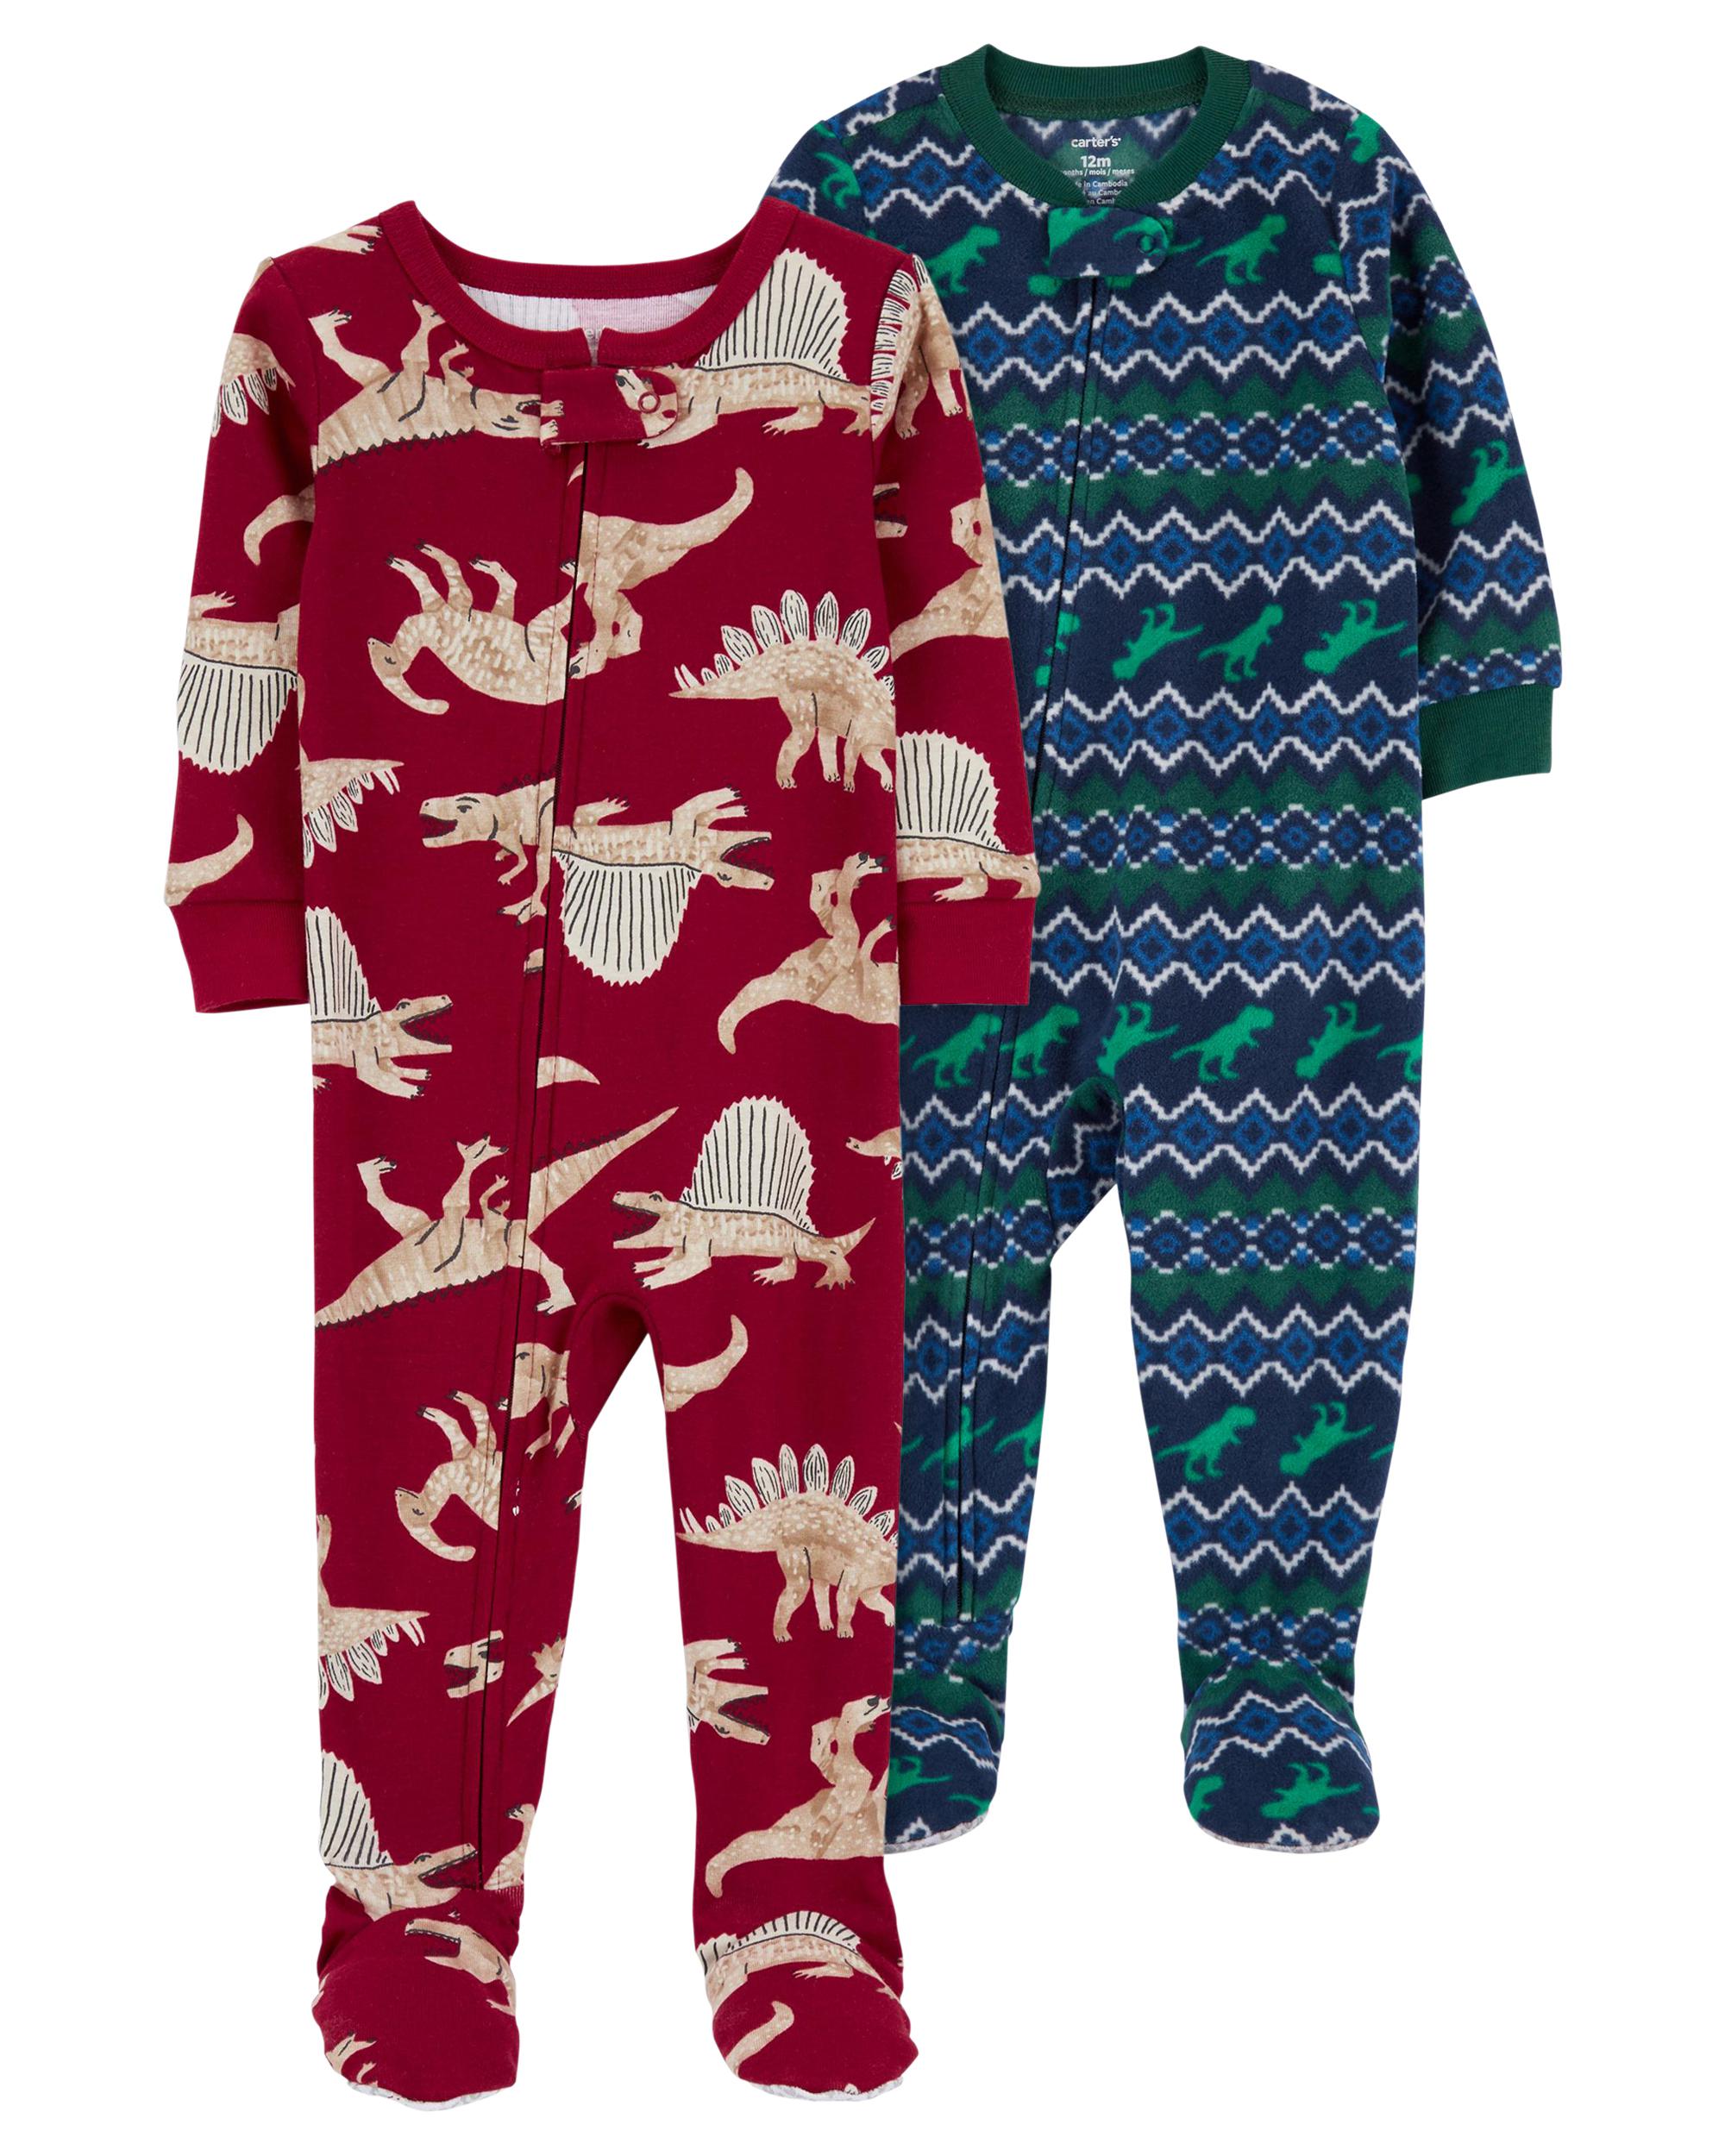 Toddler 2-Pack Footie 1-Piece Pyjamas Set